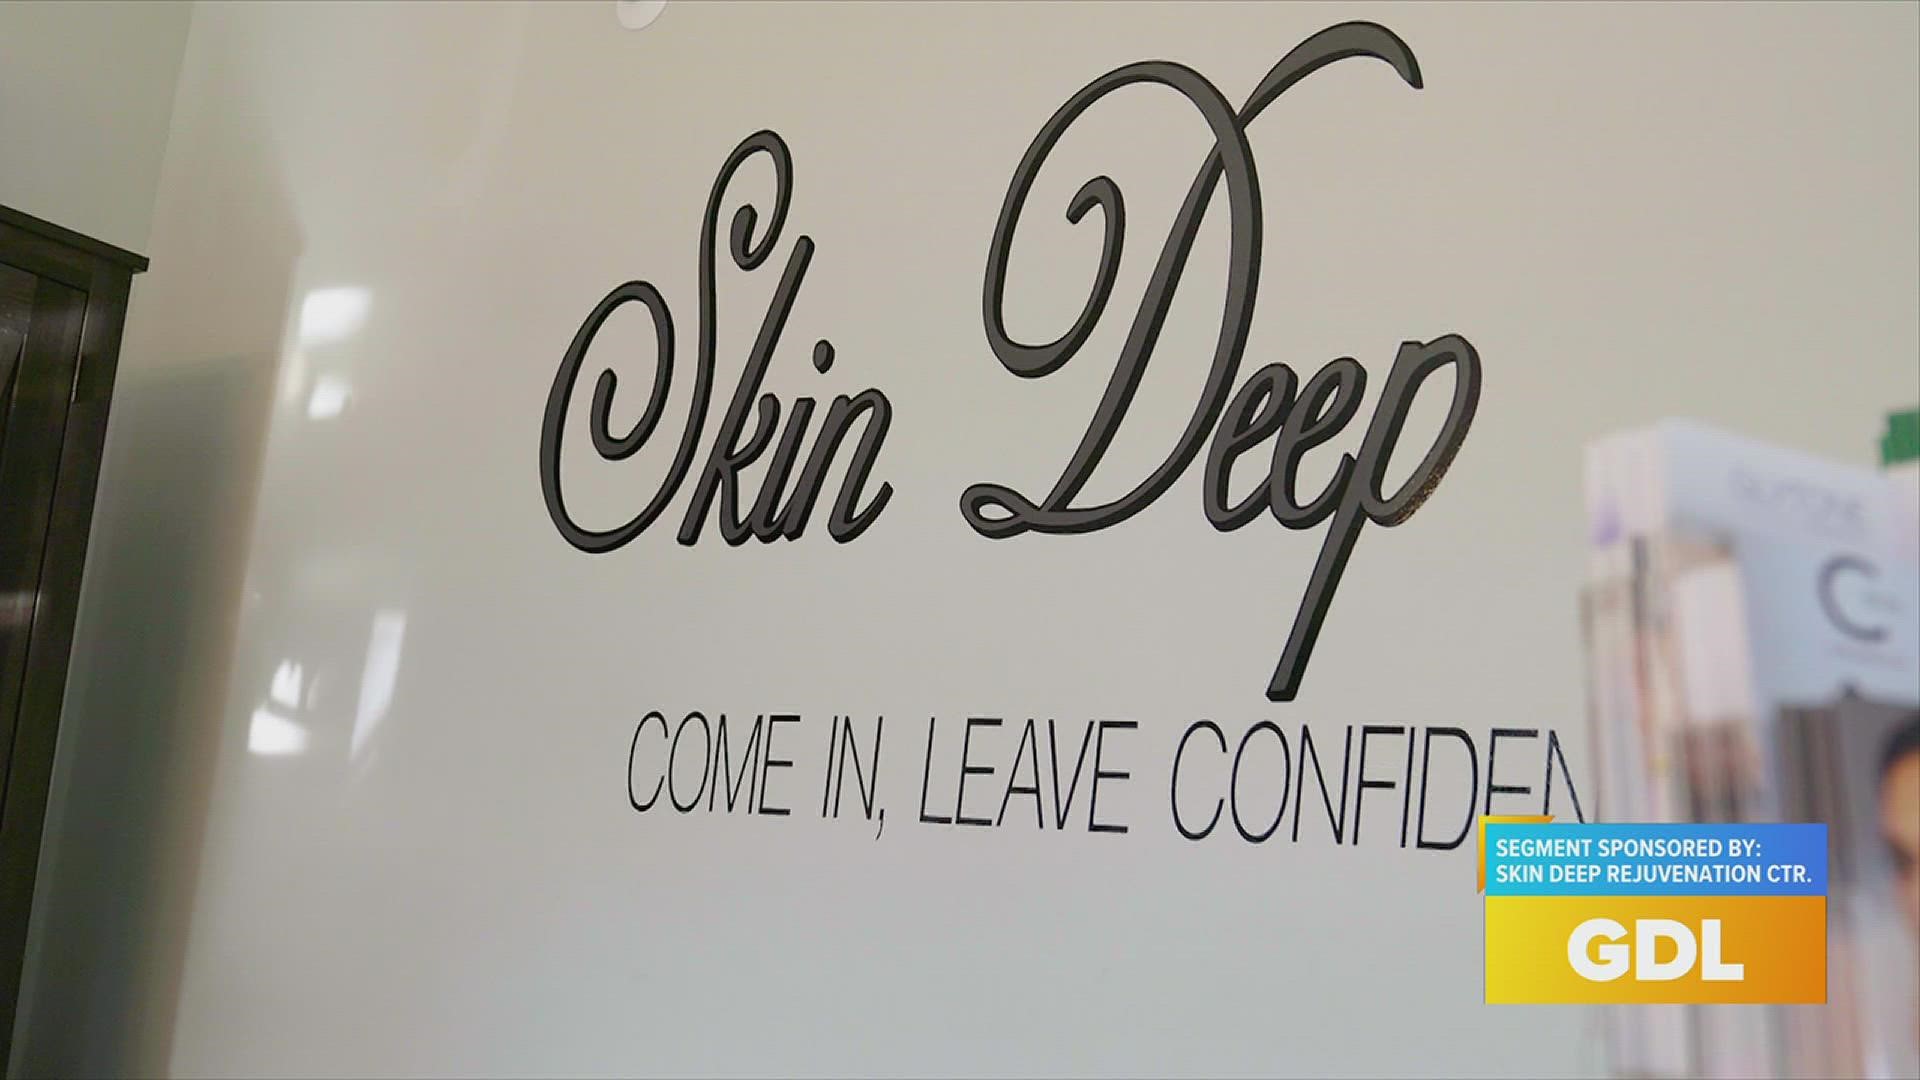 Skin Deep Rejuvenation Center is located at 8 Old Bloomfield Pike Suite 40 in Bardstown, KY. For more information, visit skindeepinbardstown.com.